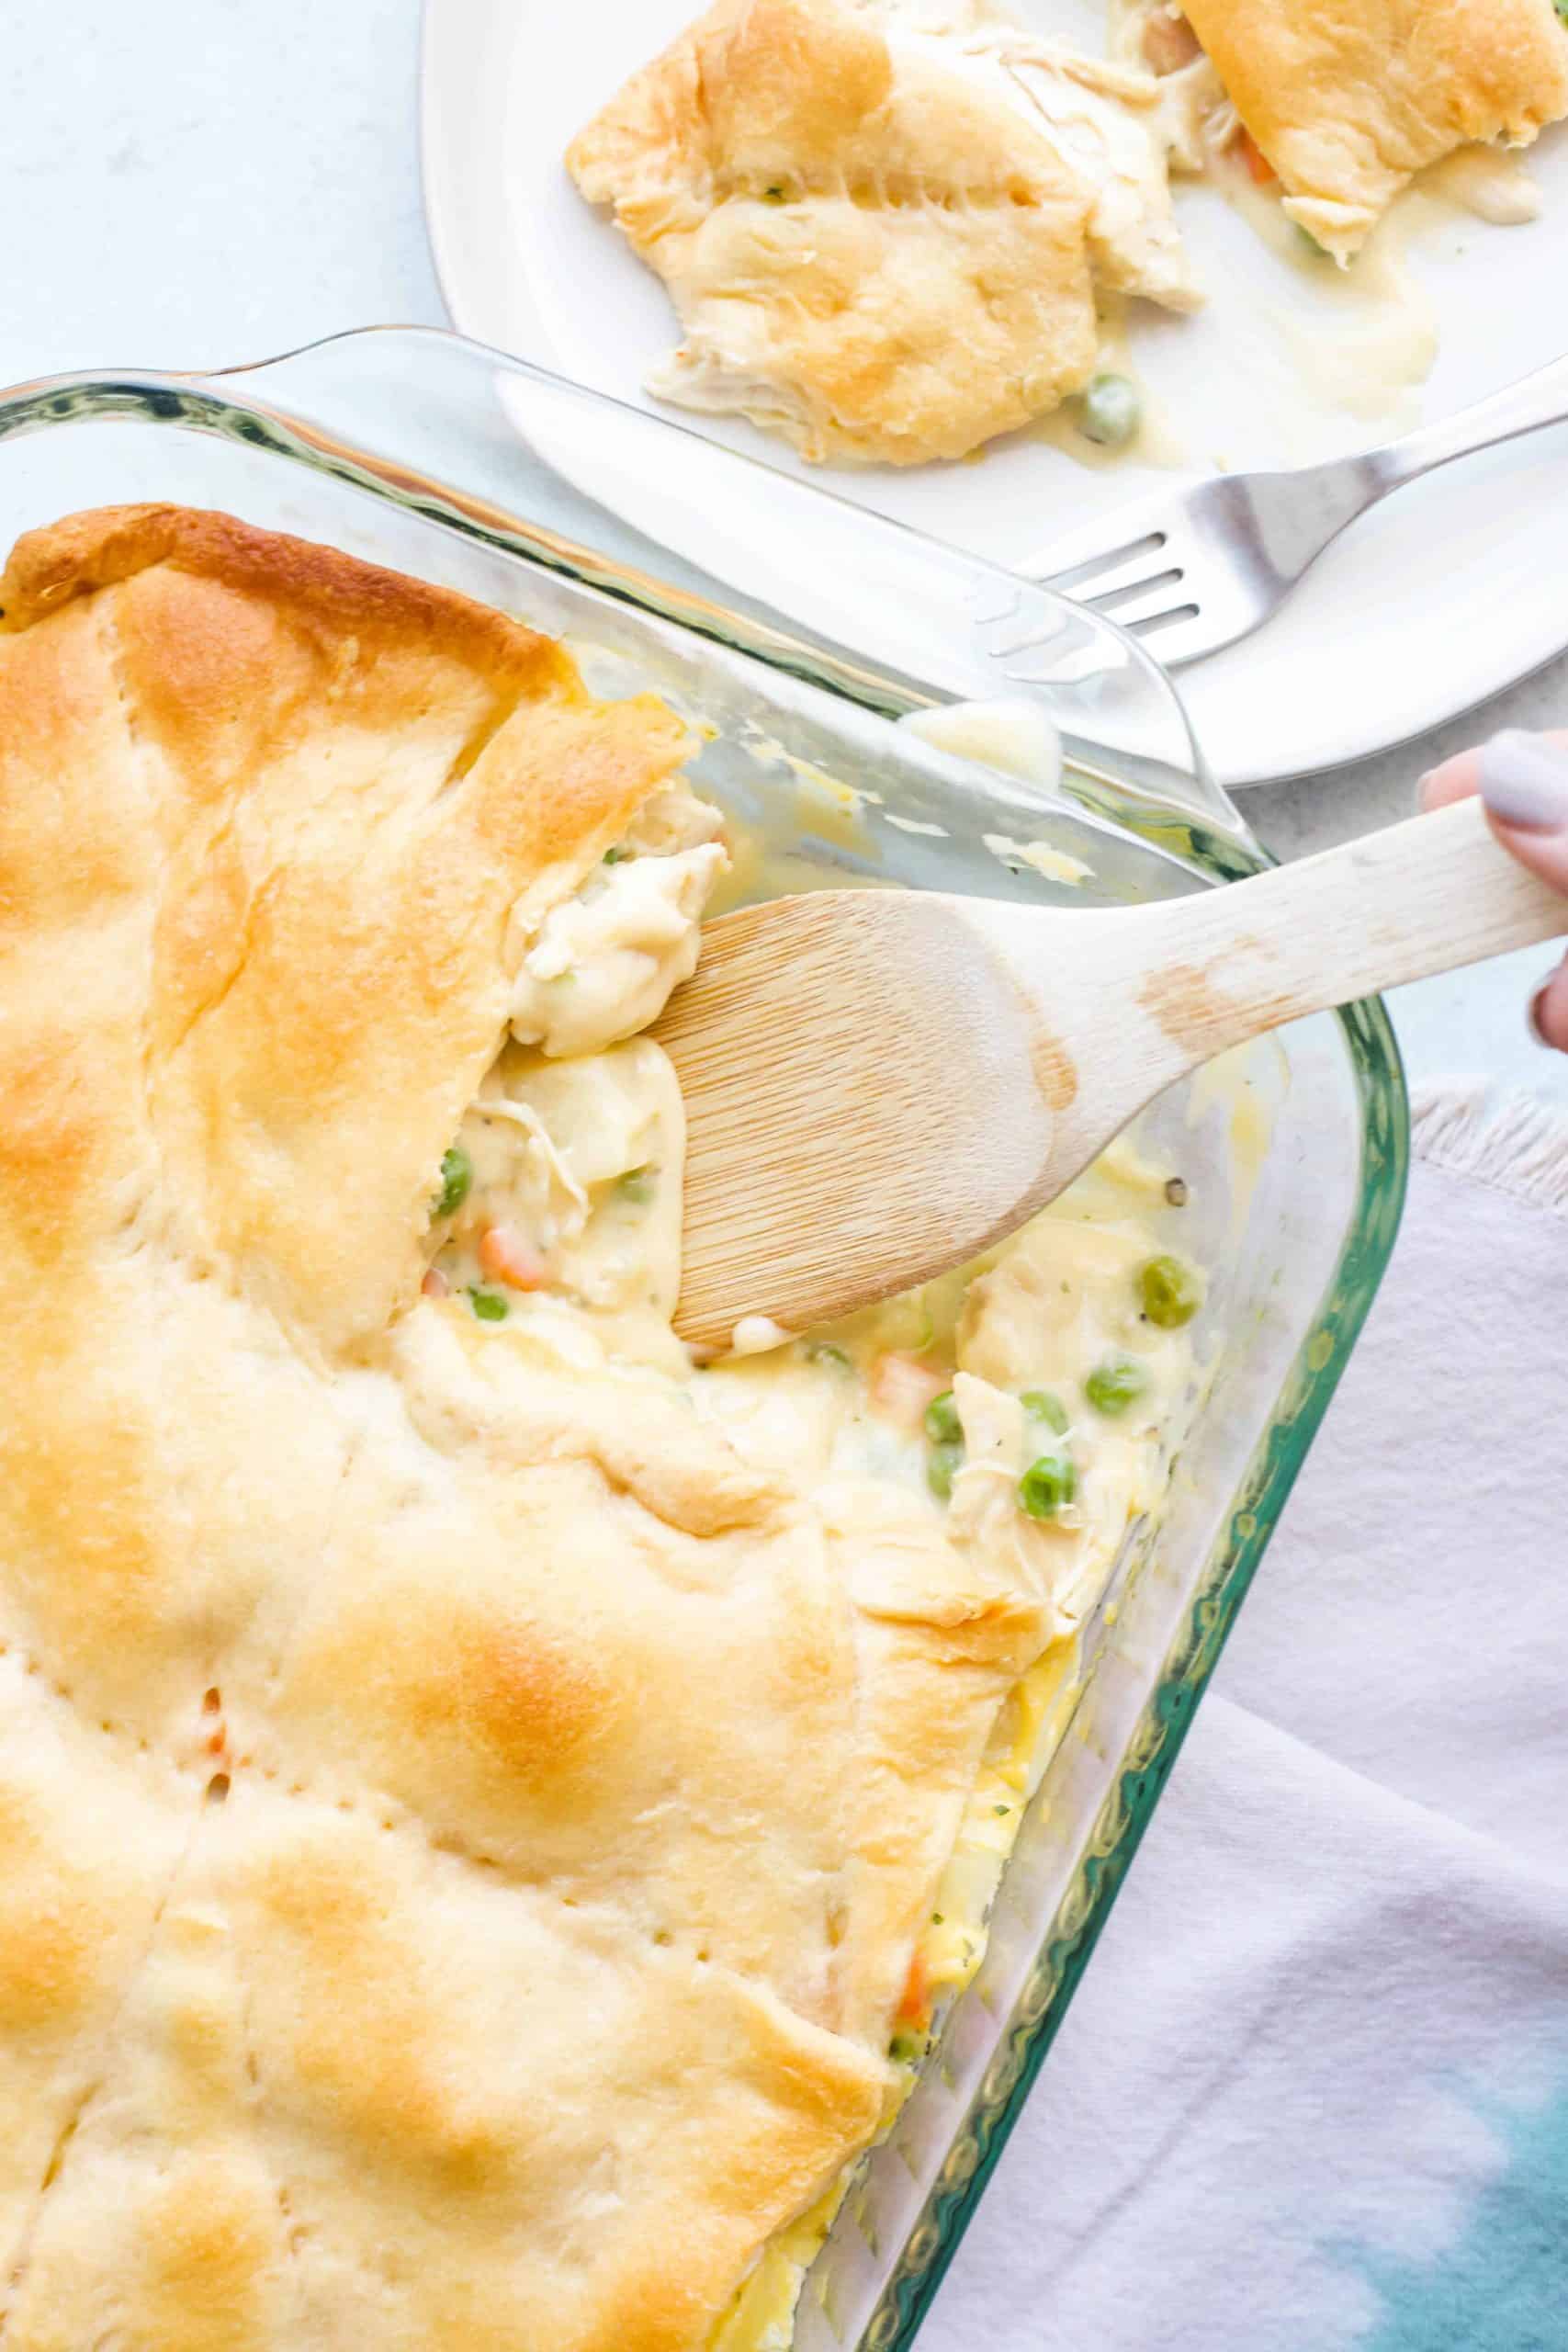 https://deliciousmadeeasy.com/wp-content/uploads/2019/11/creamy-chicken-pot-pie-casserole-6-of-6-scaled.jpg